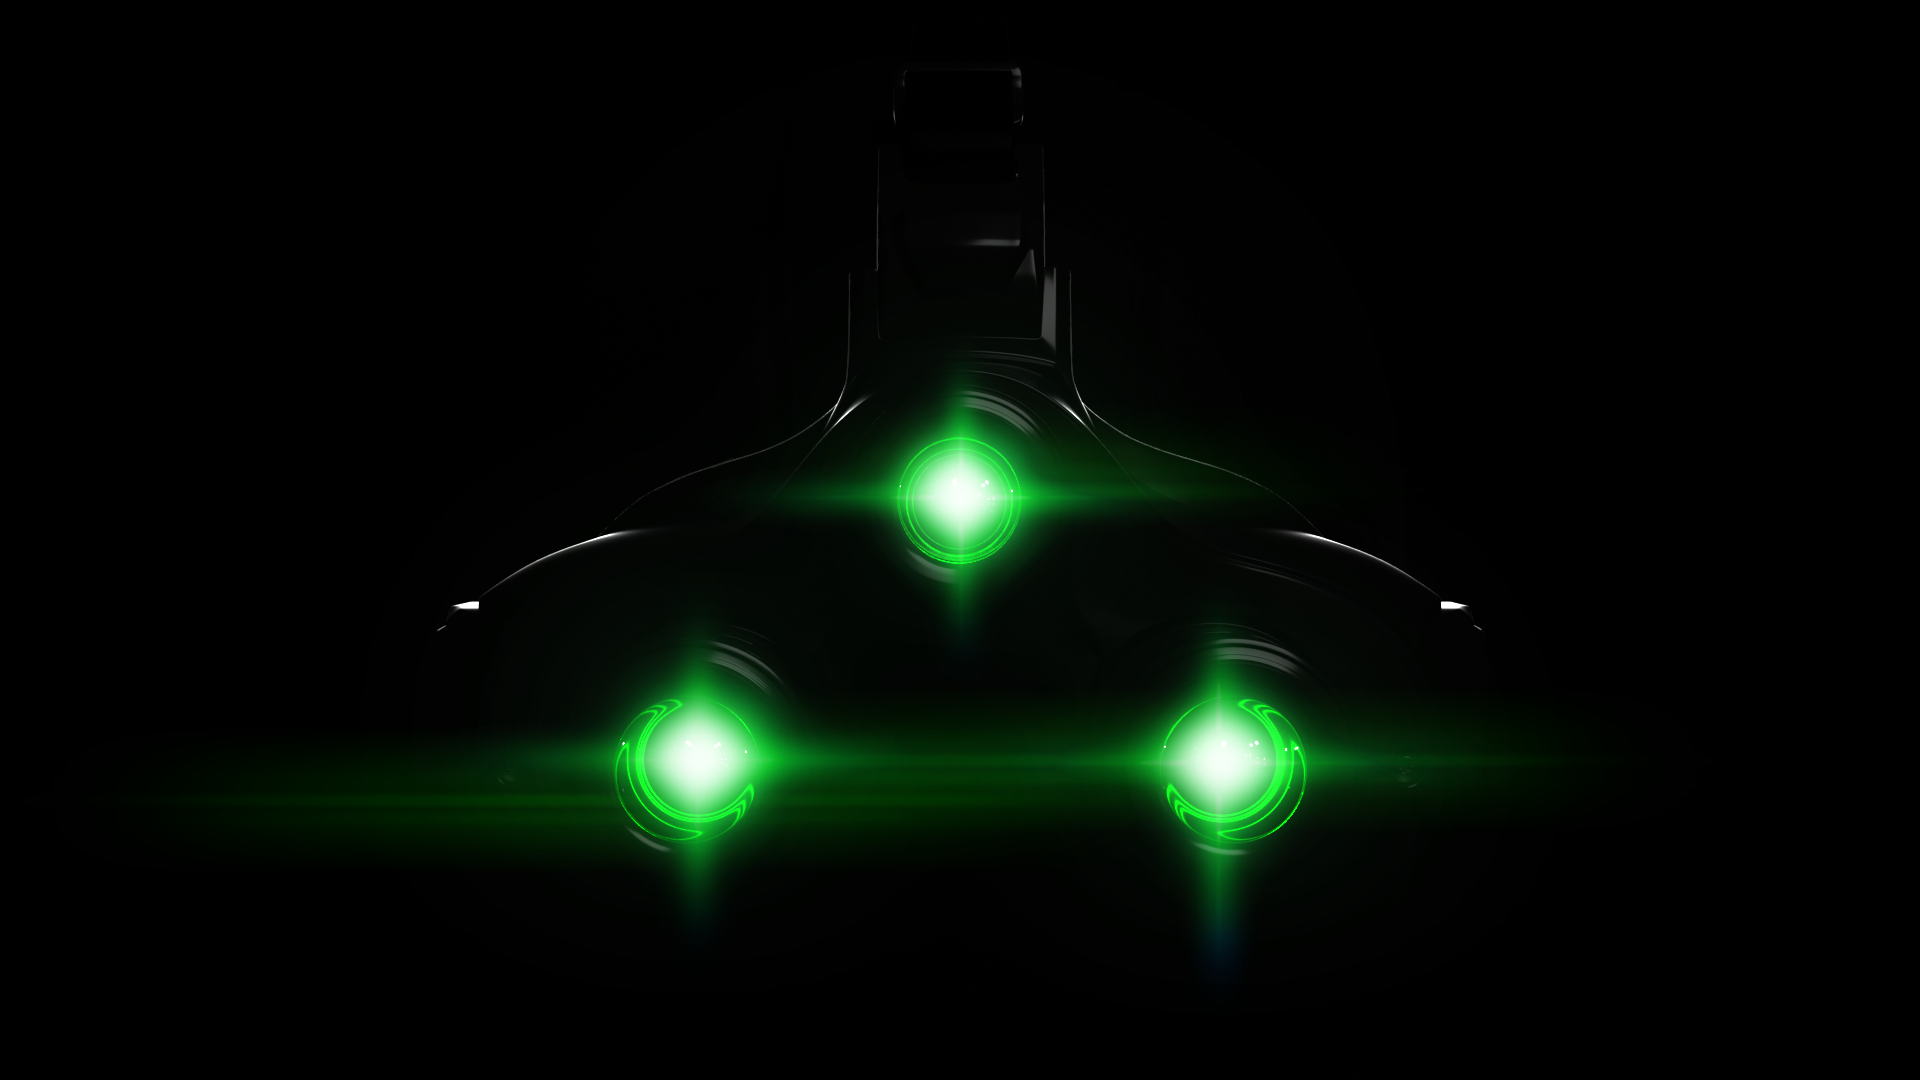 Splinter Cell Night Vision Goggles Black Background Bokeh Green 1920x1080